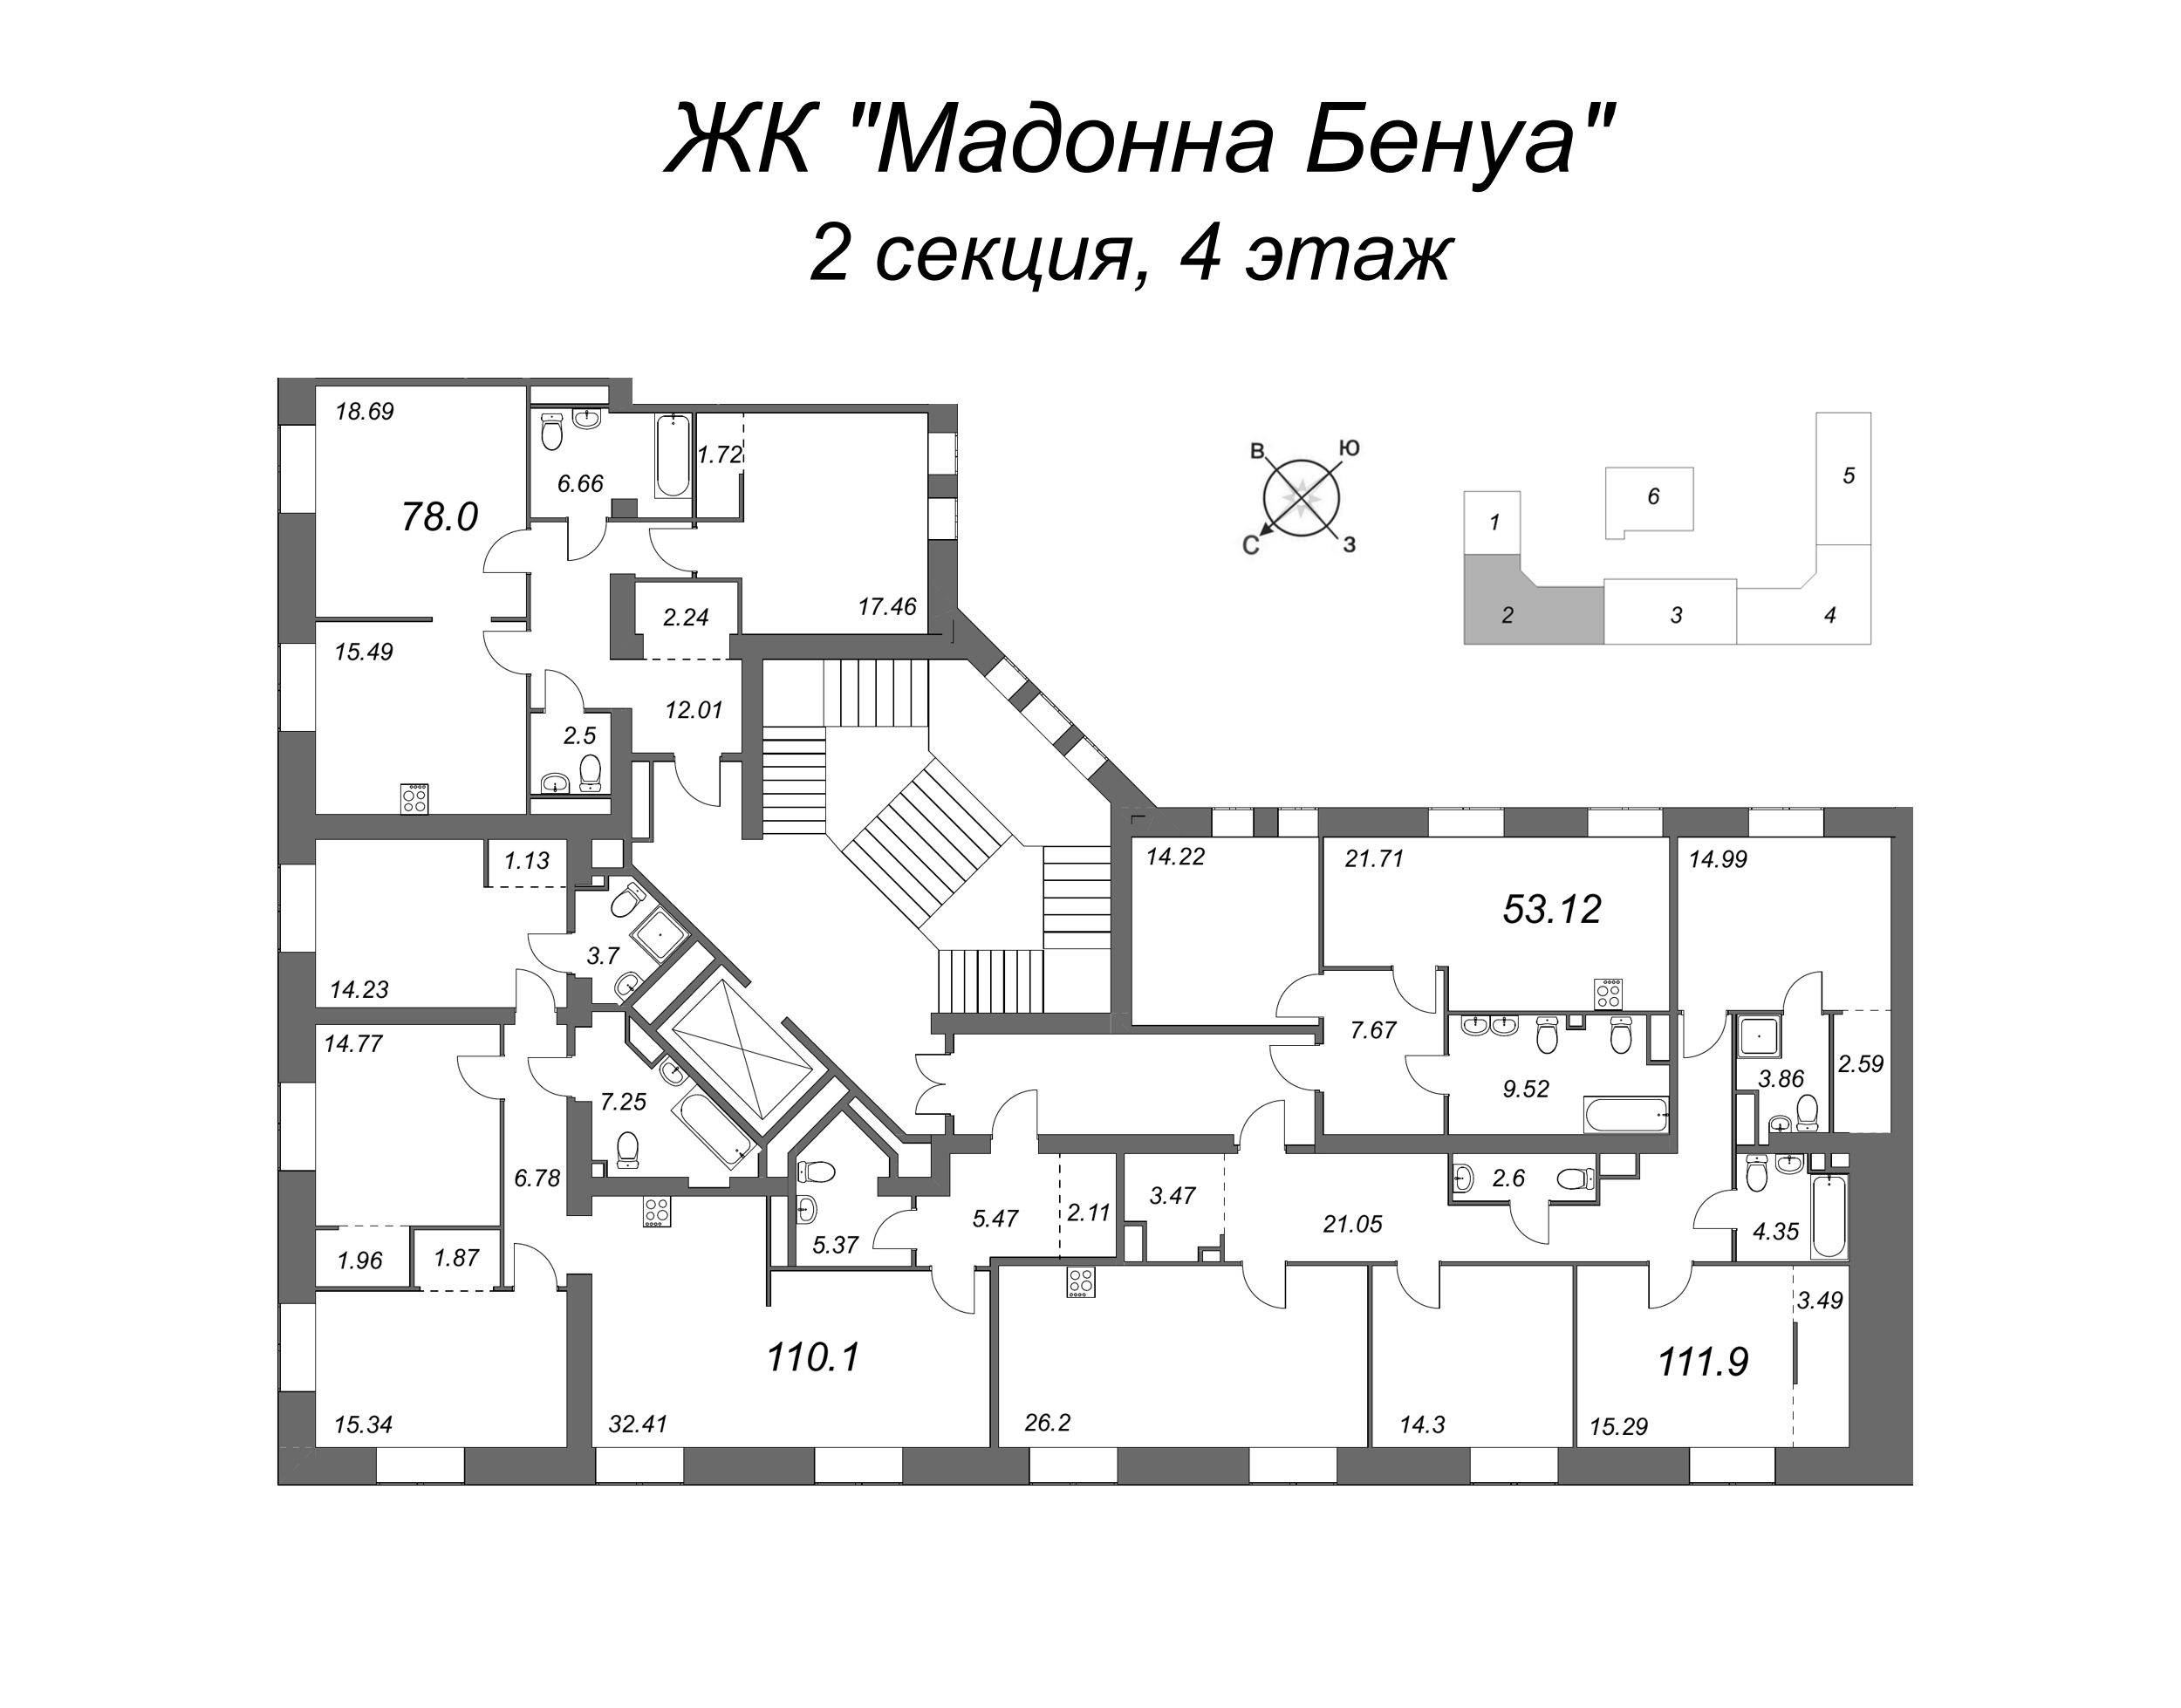 4-комнатная (Евро) квартира, 119 м² в ЖК "Мадонна Бенуа" - планировка этажа